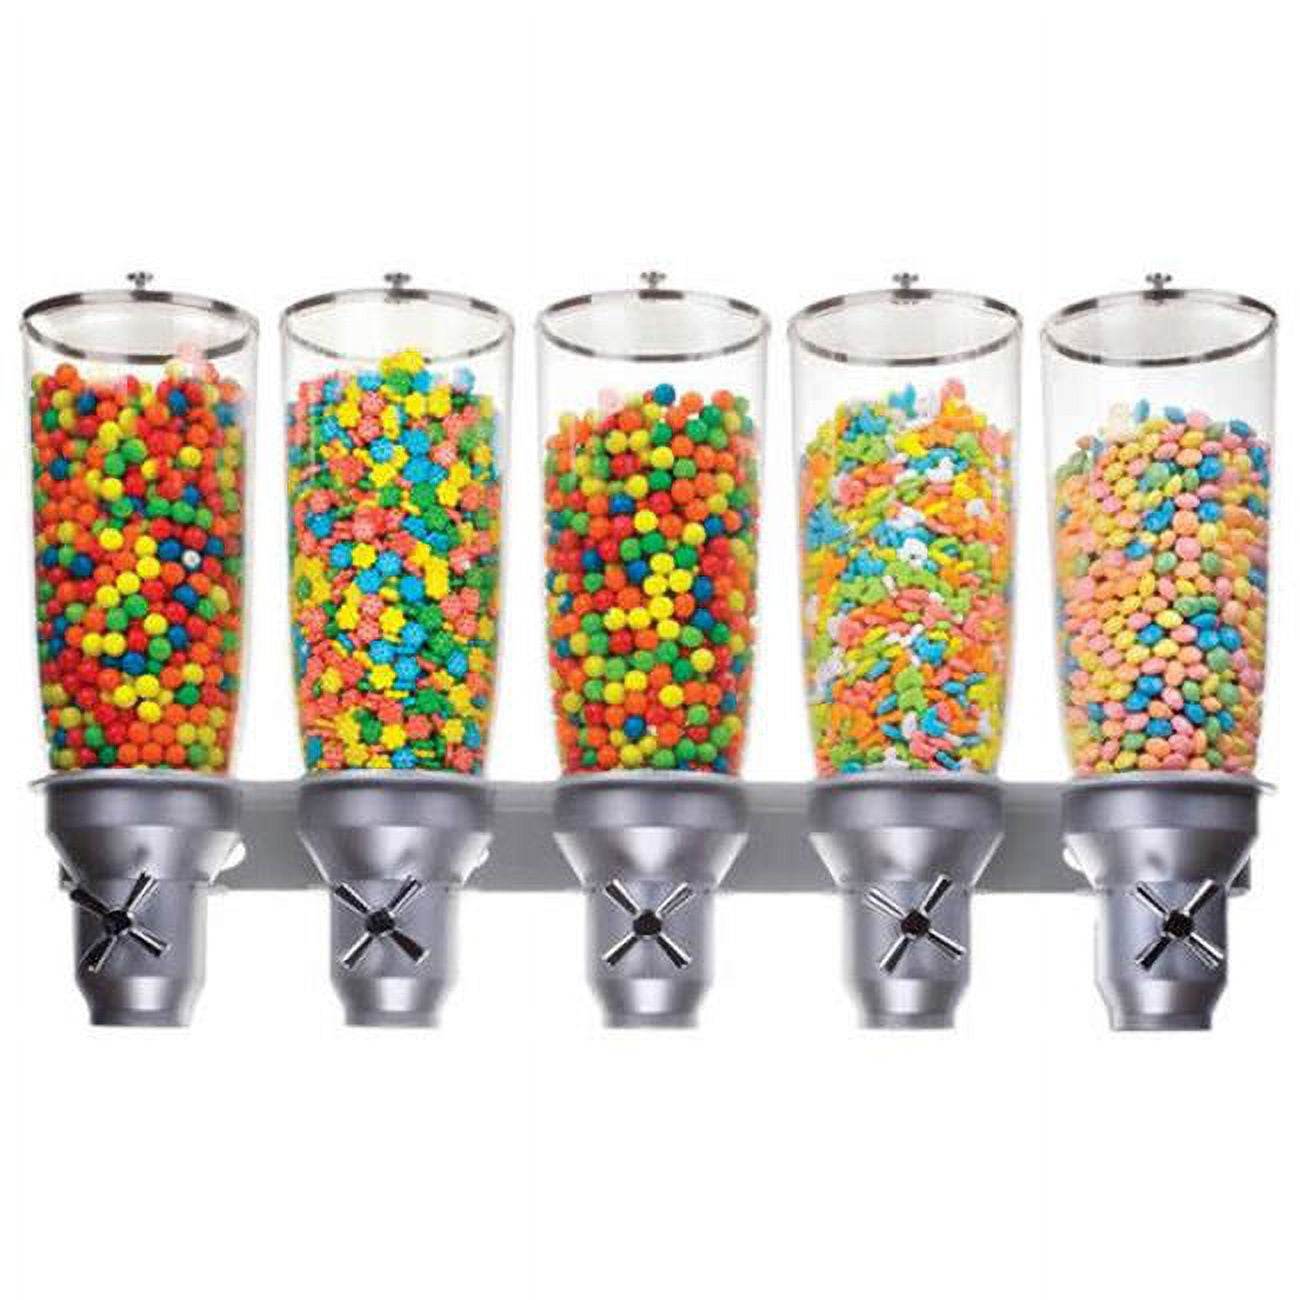 3518-5-39 5 Cylinder Cereal Dispenser With Mount - Silver